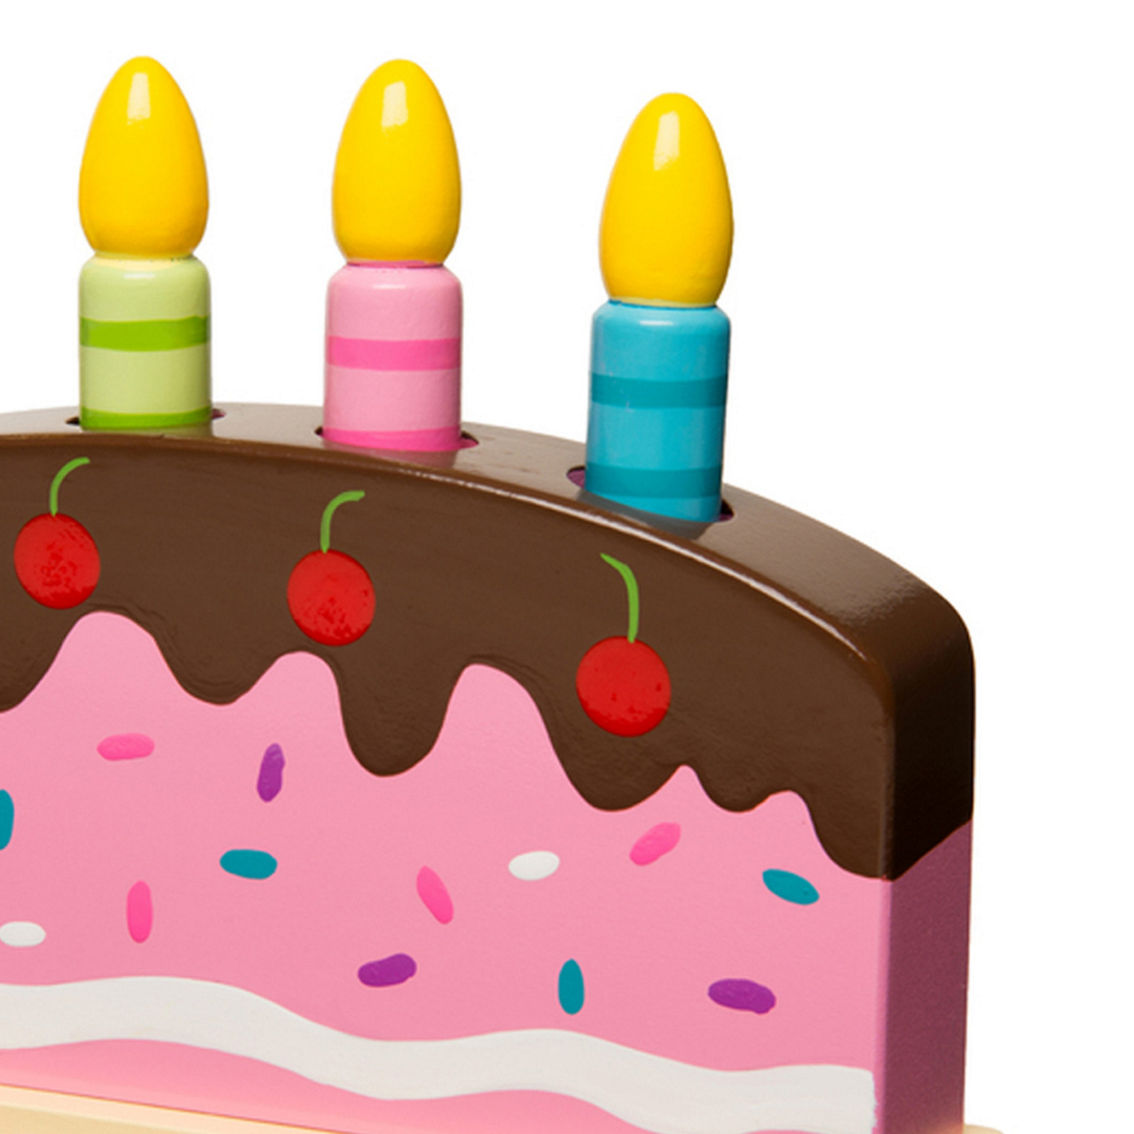 The Original Toy Company Pop Up Birthday Cake - Image 3 of 3